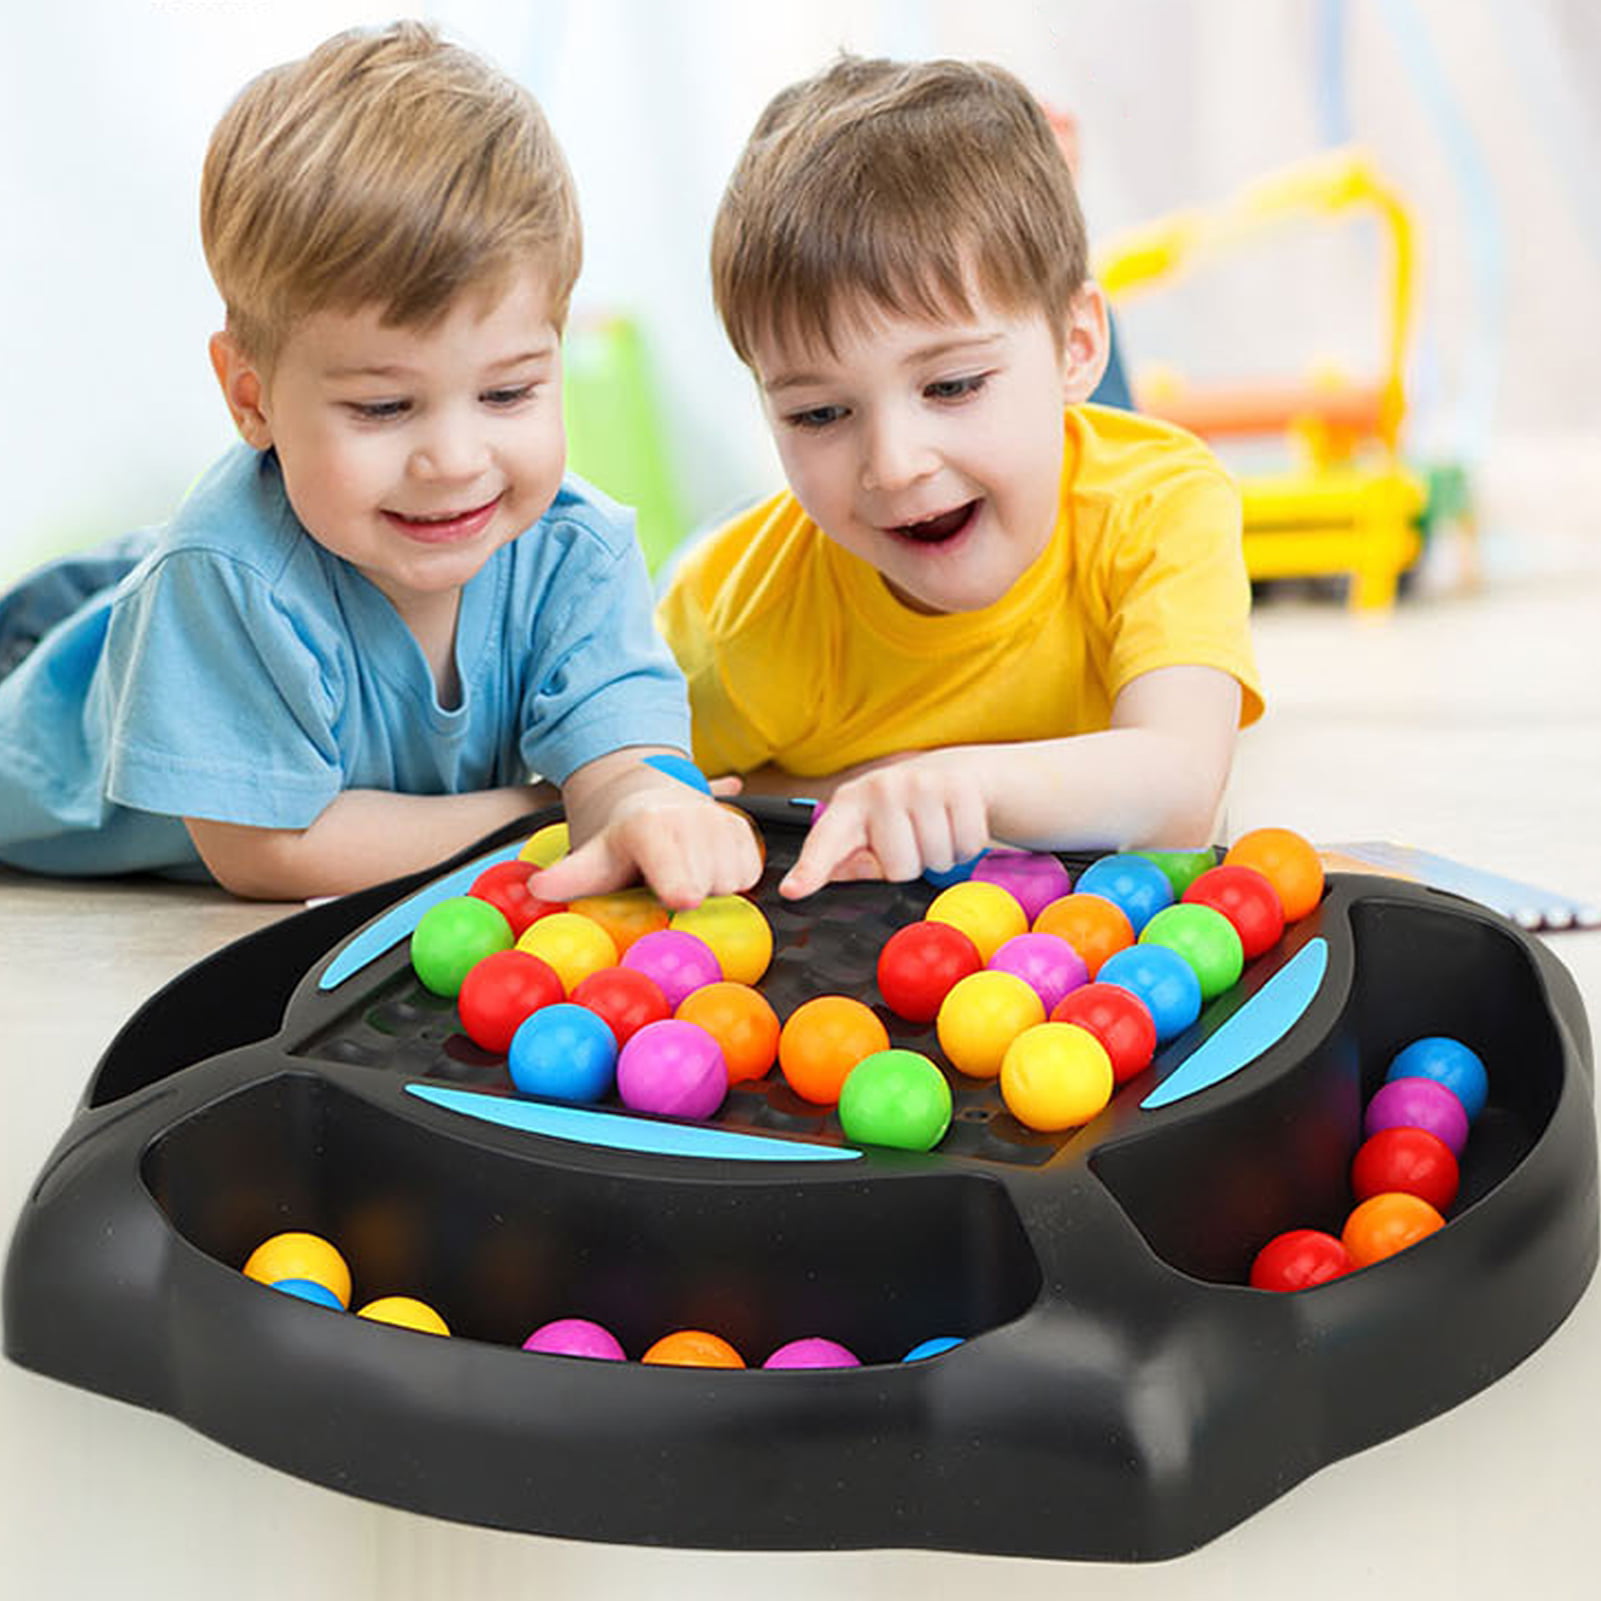 Compre YS5698 Rainbow Ball Combinando Jogo Parent-Child Board Game Kids  Early Educational Toy - Bolas Coloridas da China